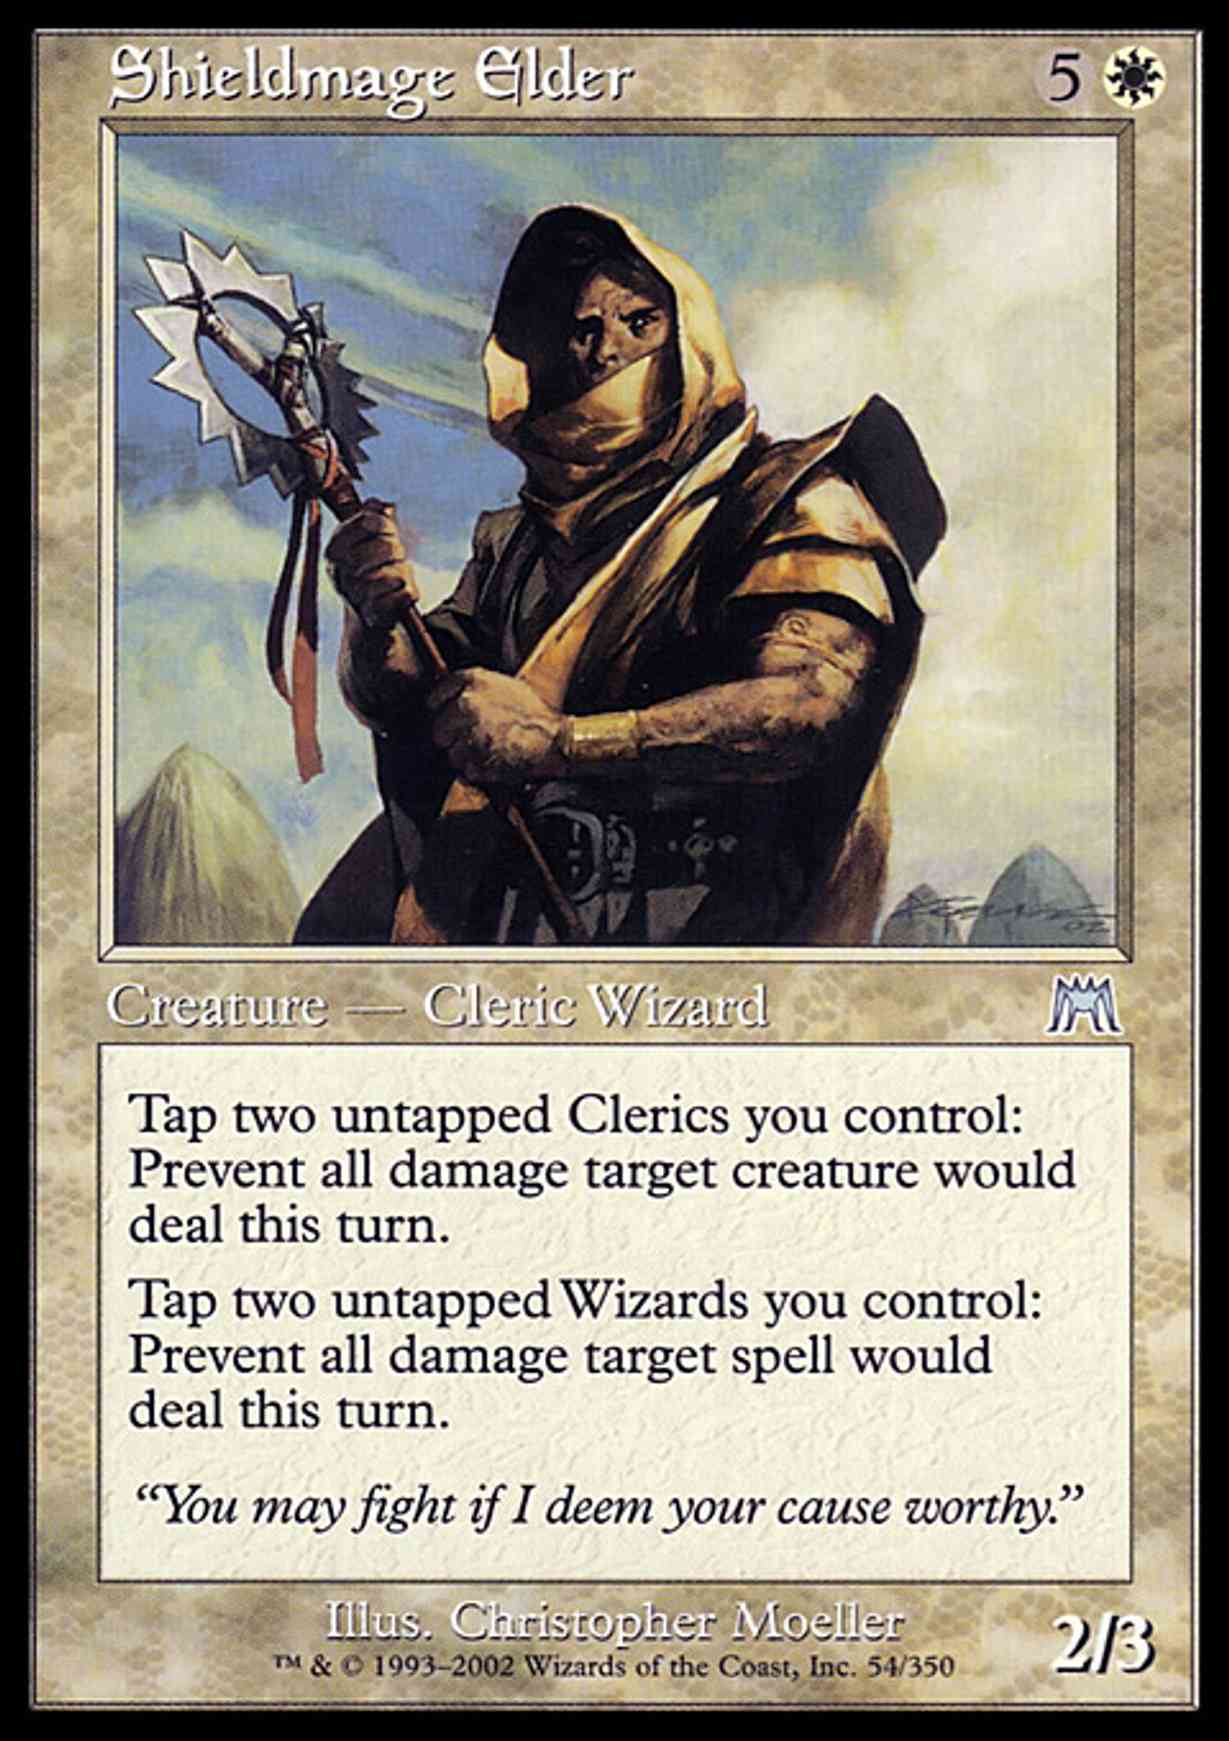 Shieldmage Elder magic card front